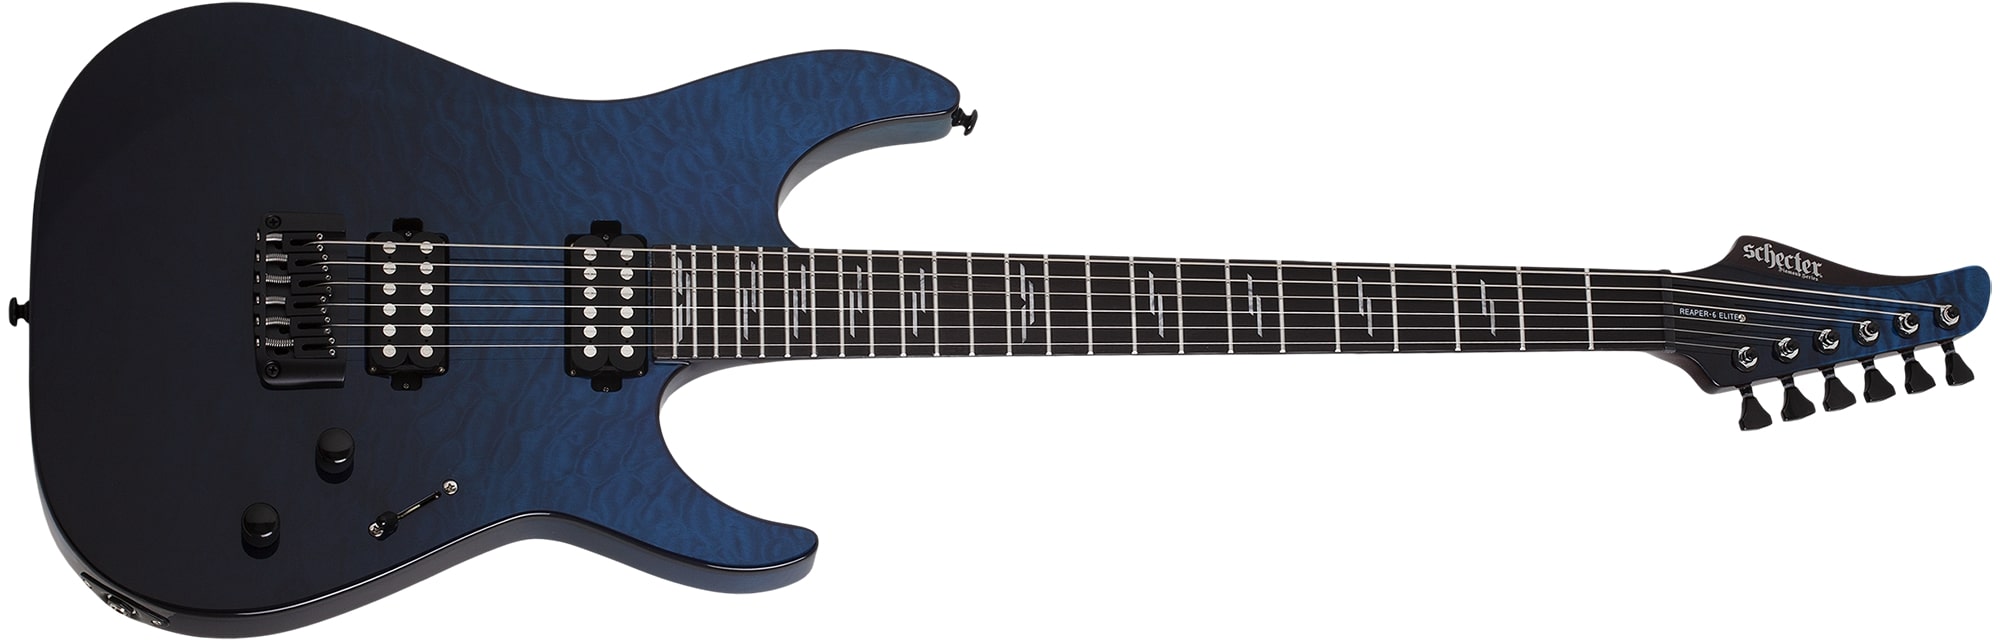 Schecter Reaper-6 Elite Electric Guitar, Deep Ocean Blue 2186-SHC